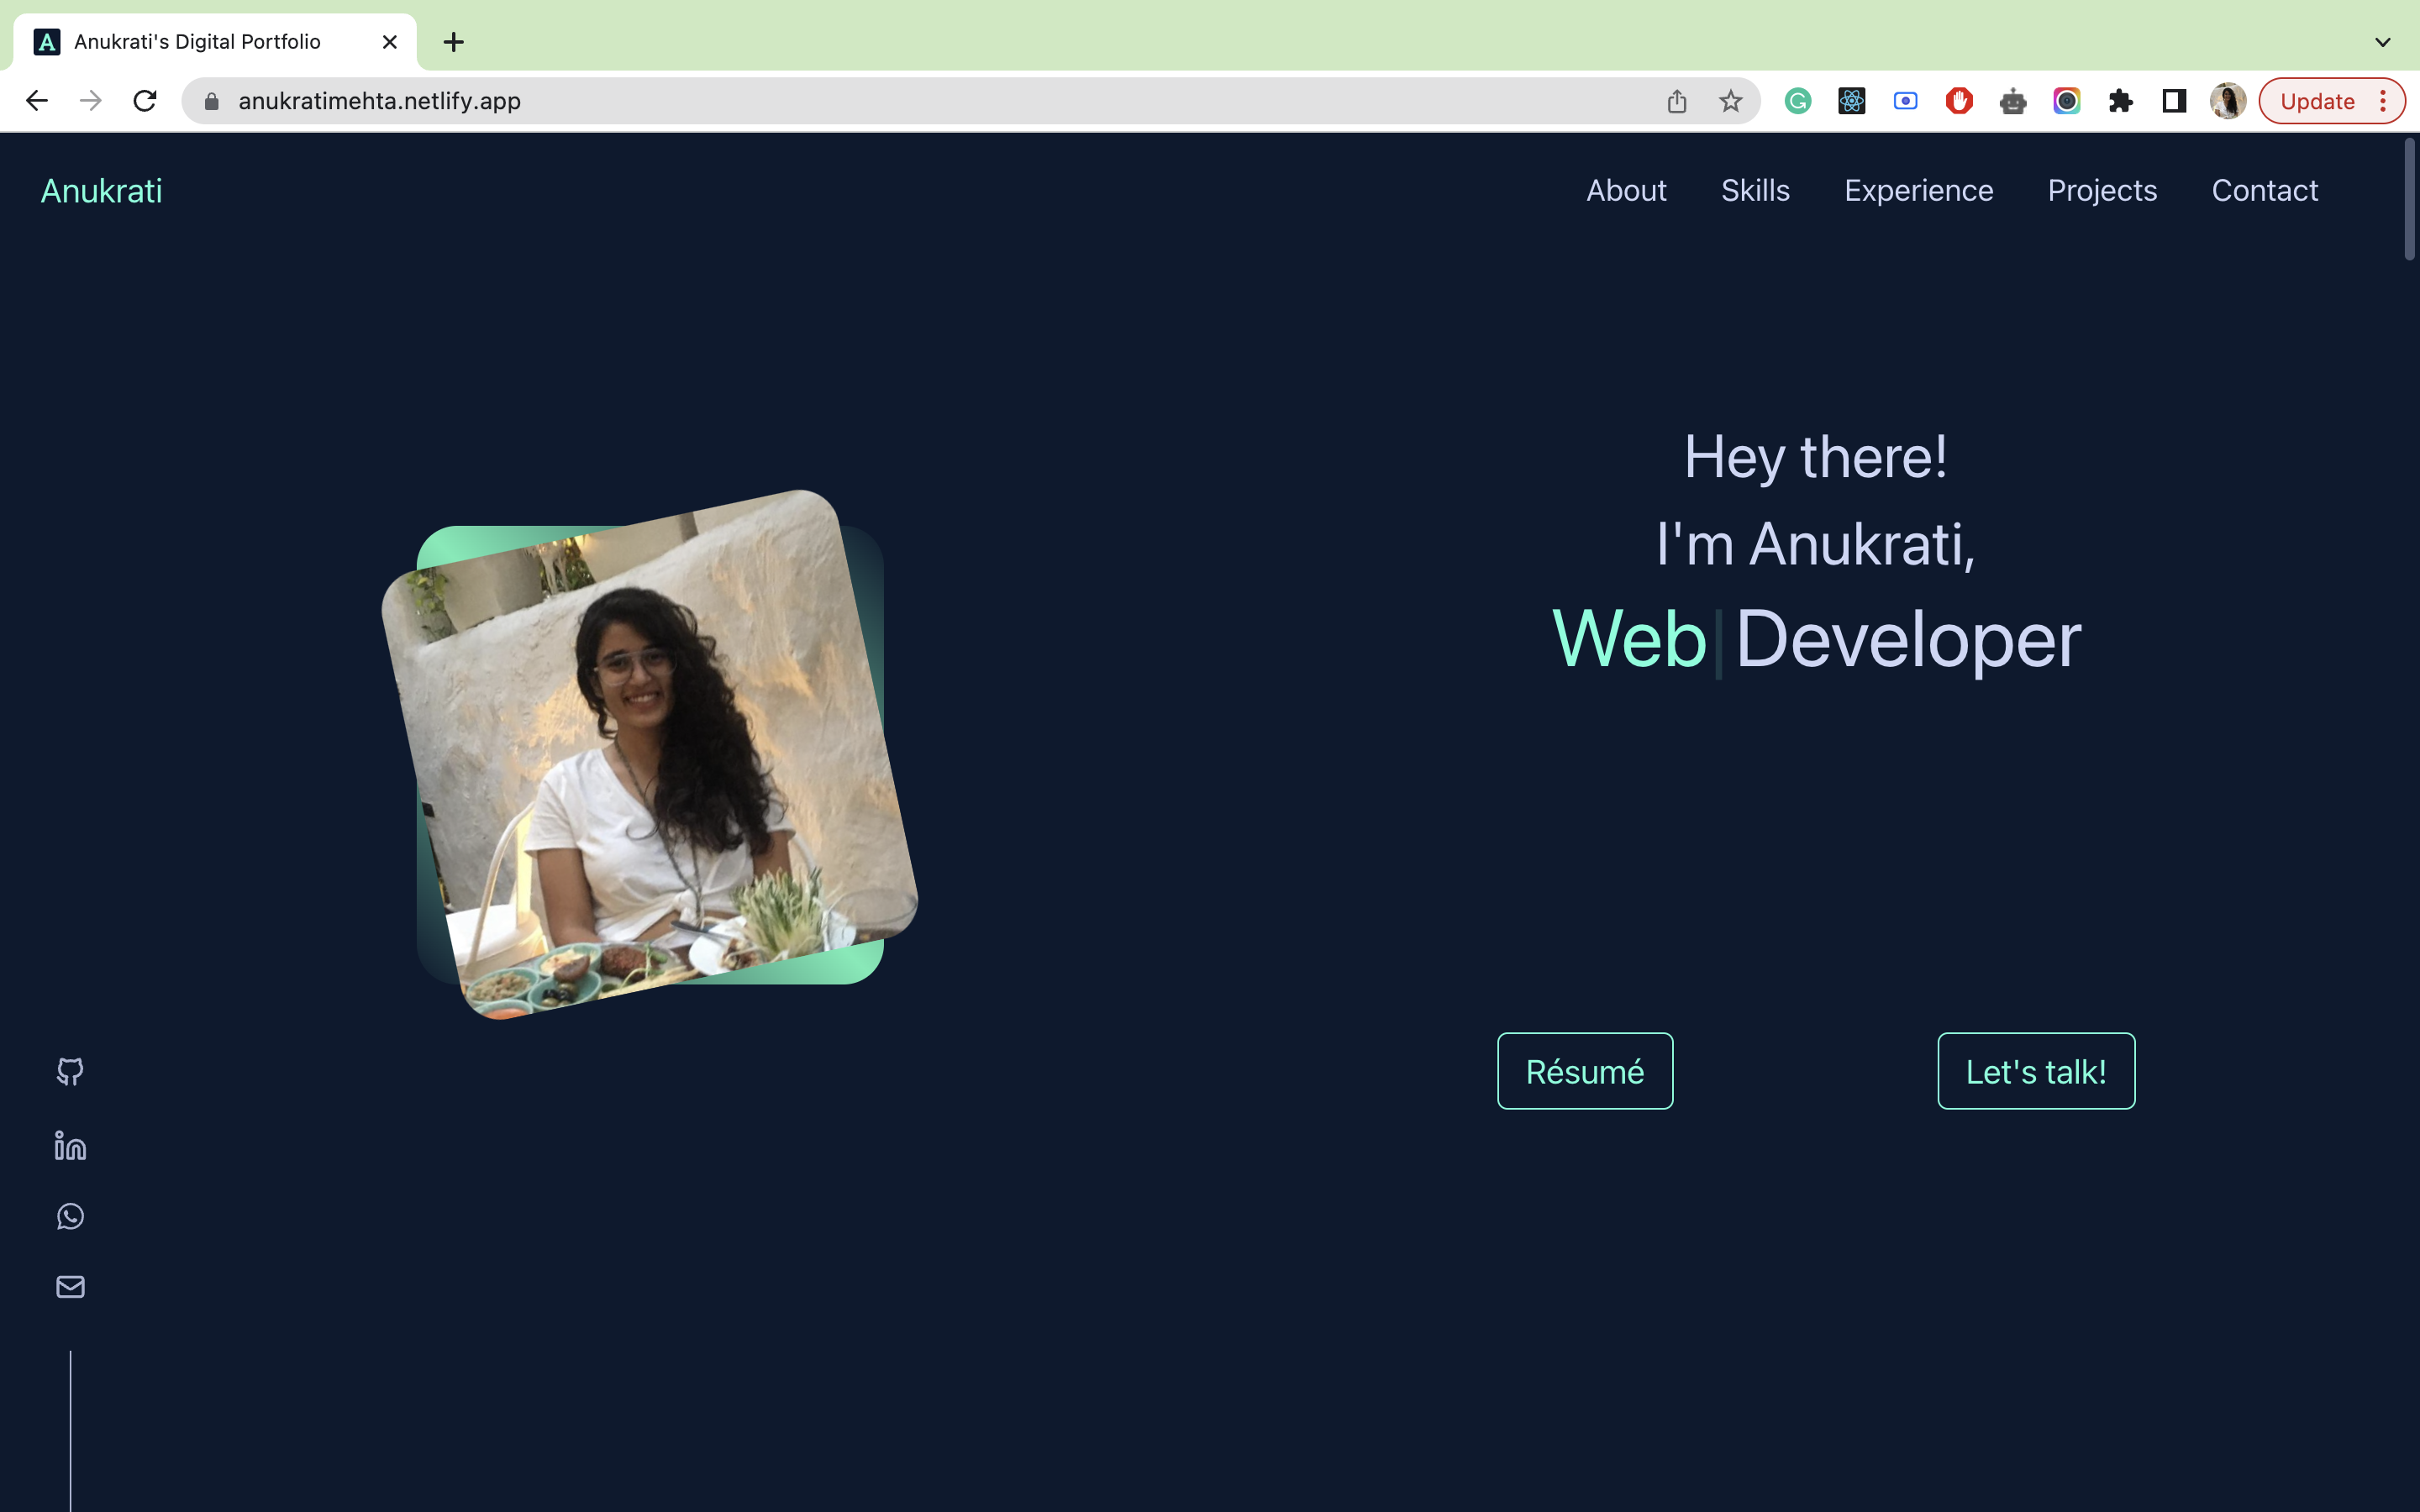 Anukrati's Digital Portfolio Xx +

 

« C  &amp; anukratimehta.netlify.app © O@&amp;@ @ » 0 A (‘Update P)

Anukrati About ~~ Skills Experience Projects Contact

Hey there!
EnV aVI